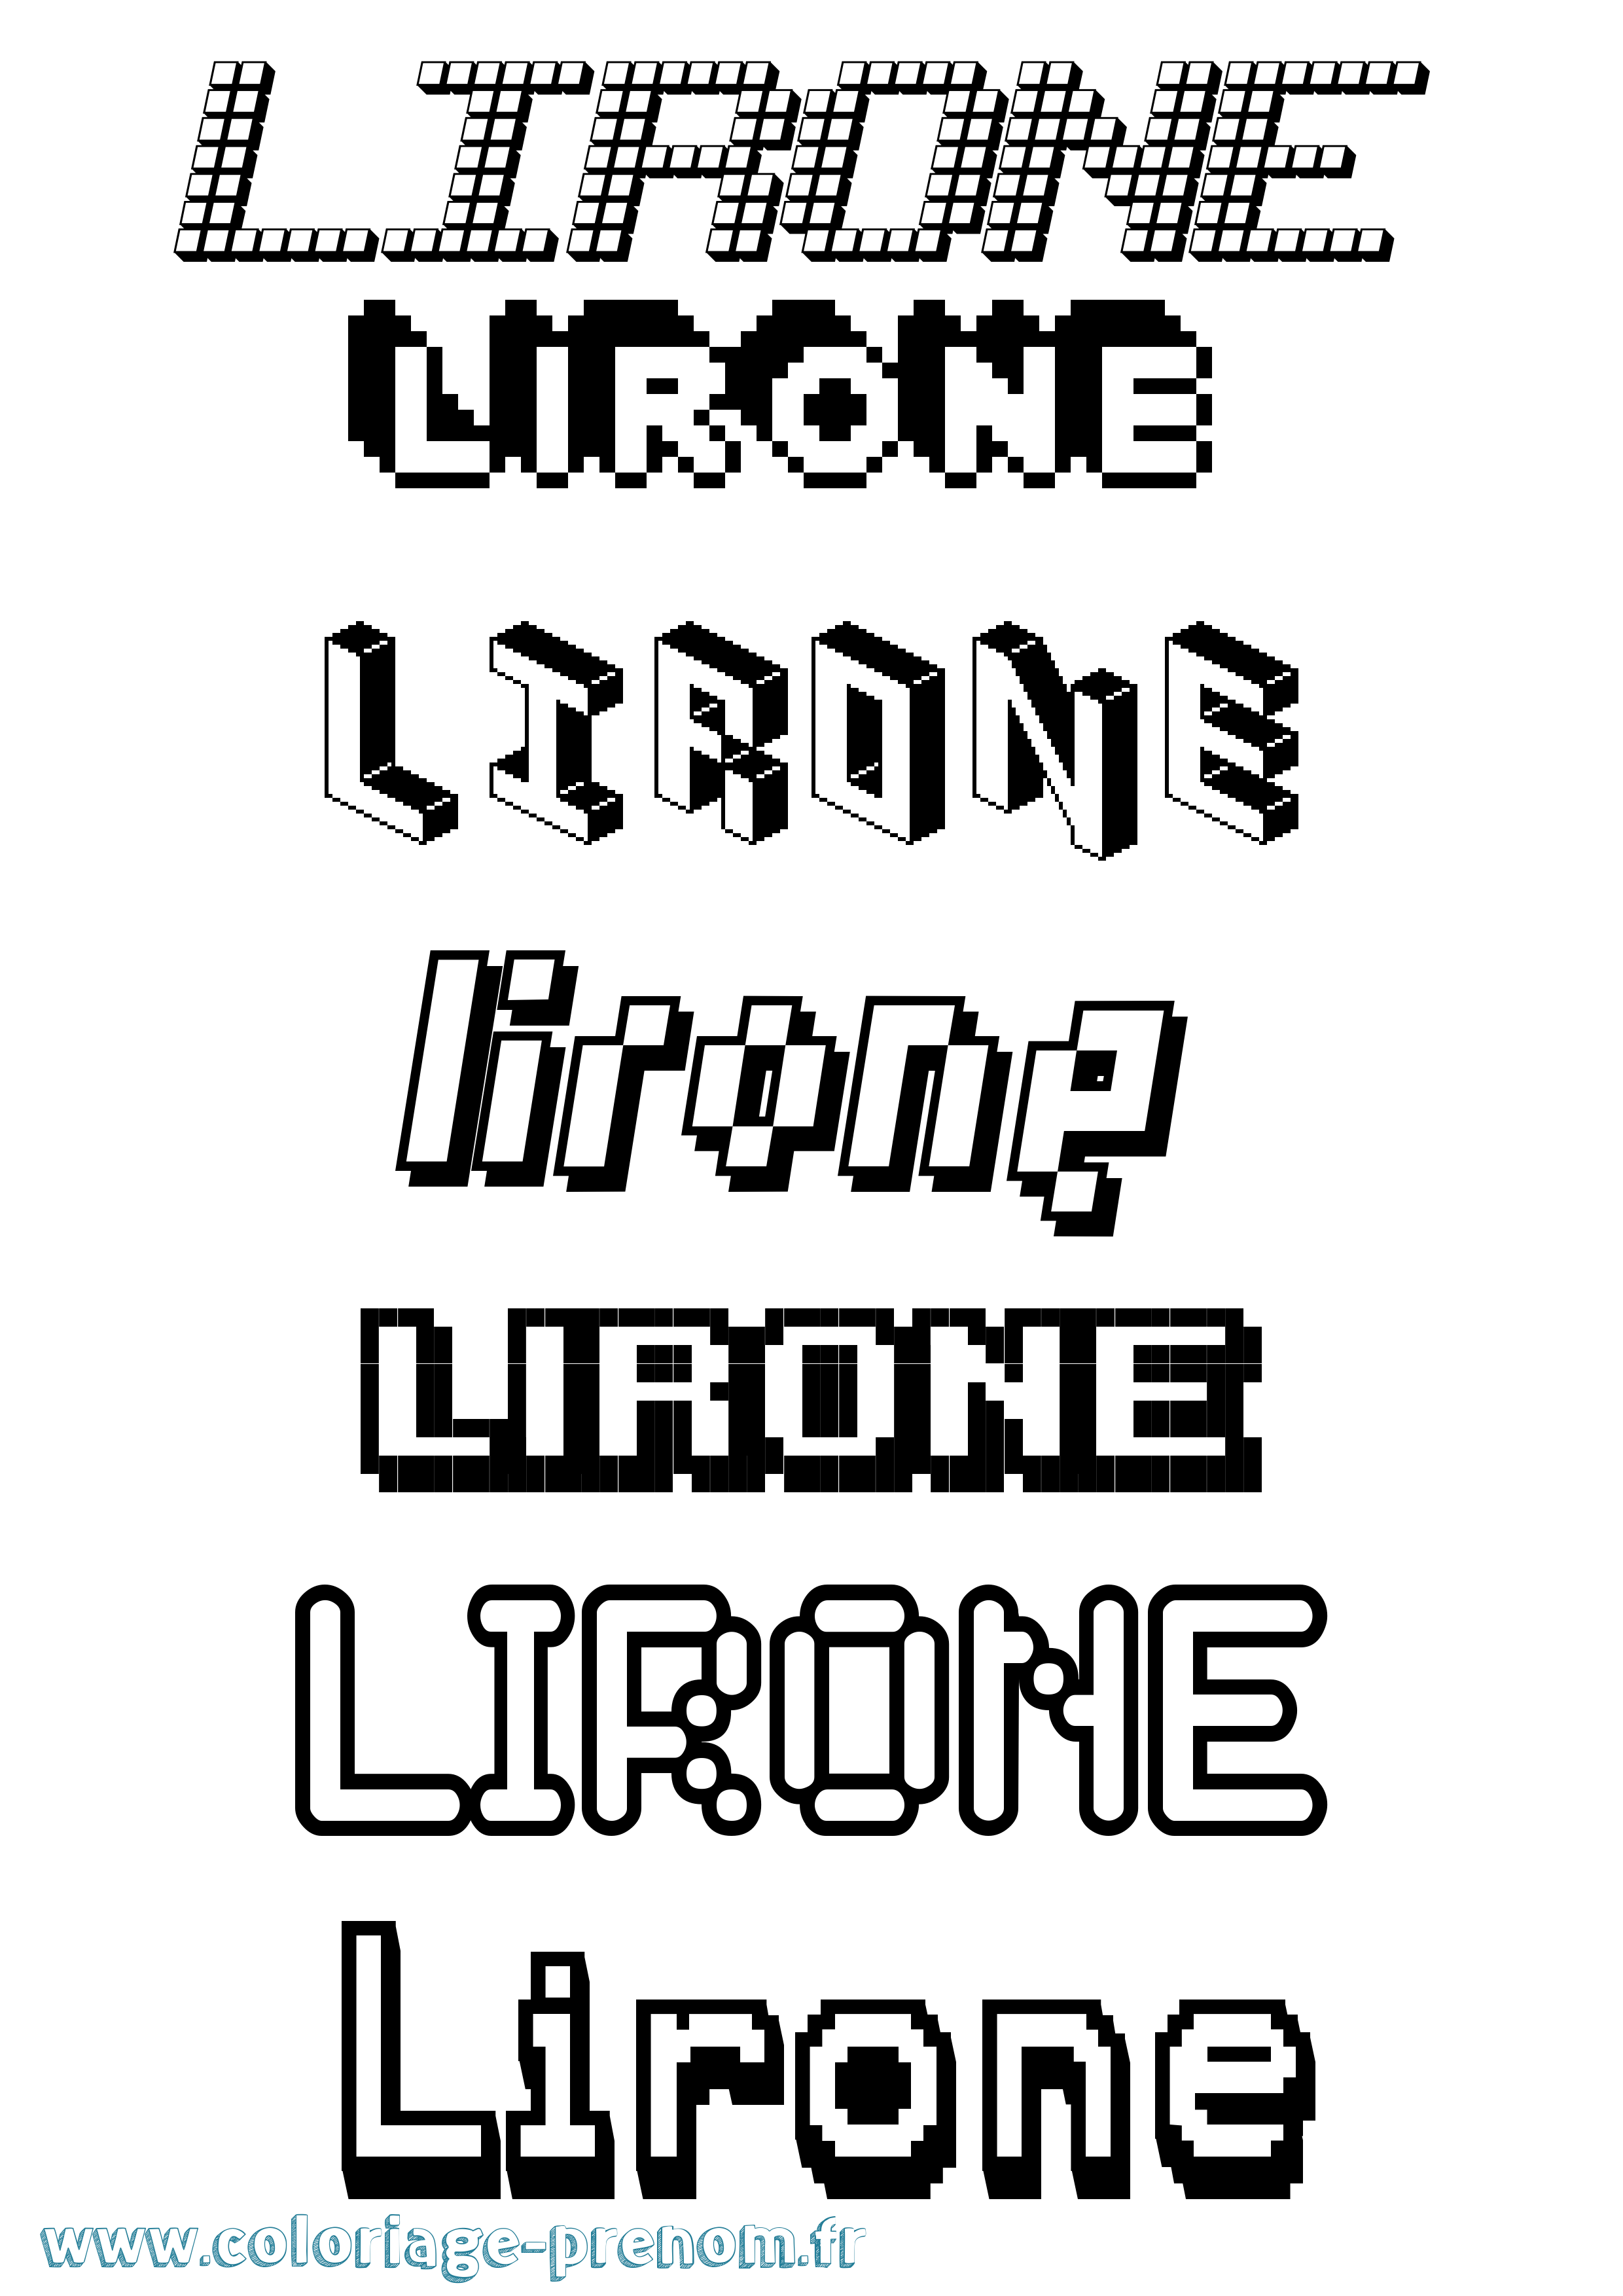 Coloriage prénom Lirone